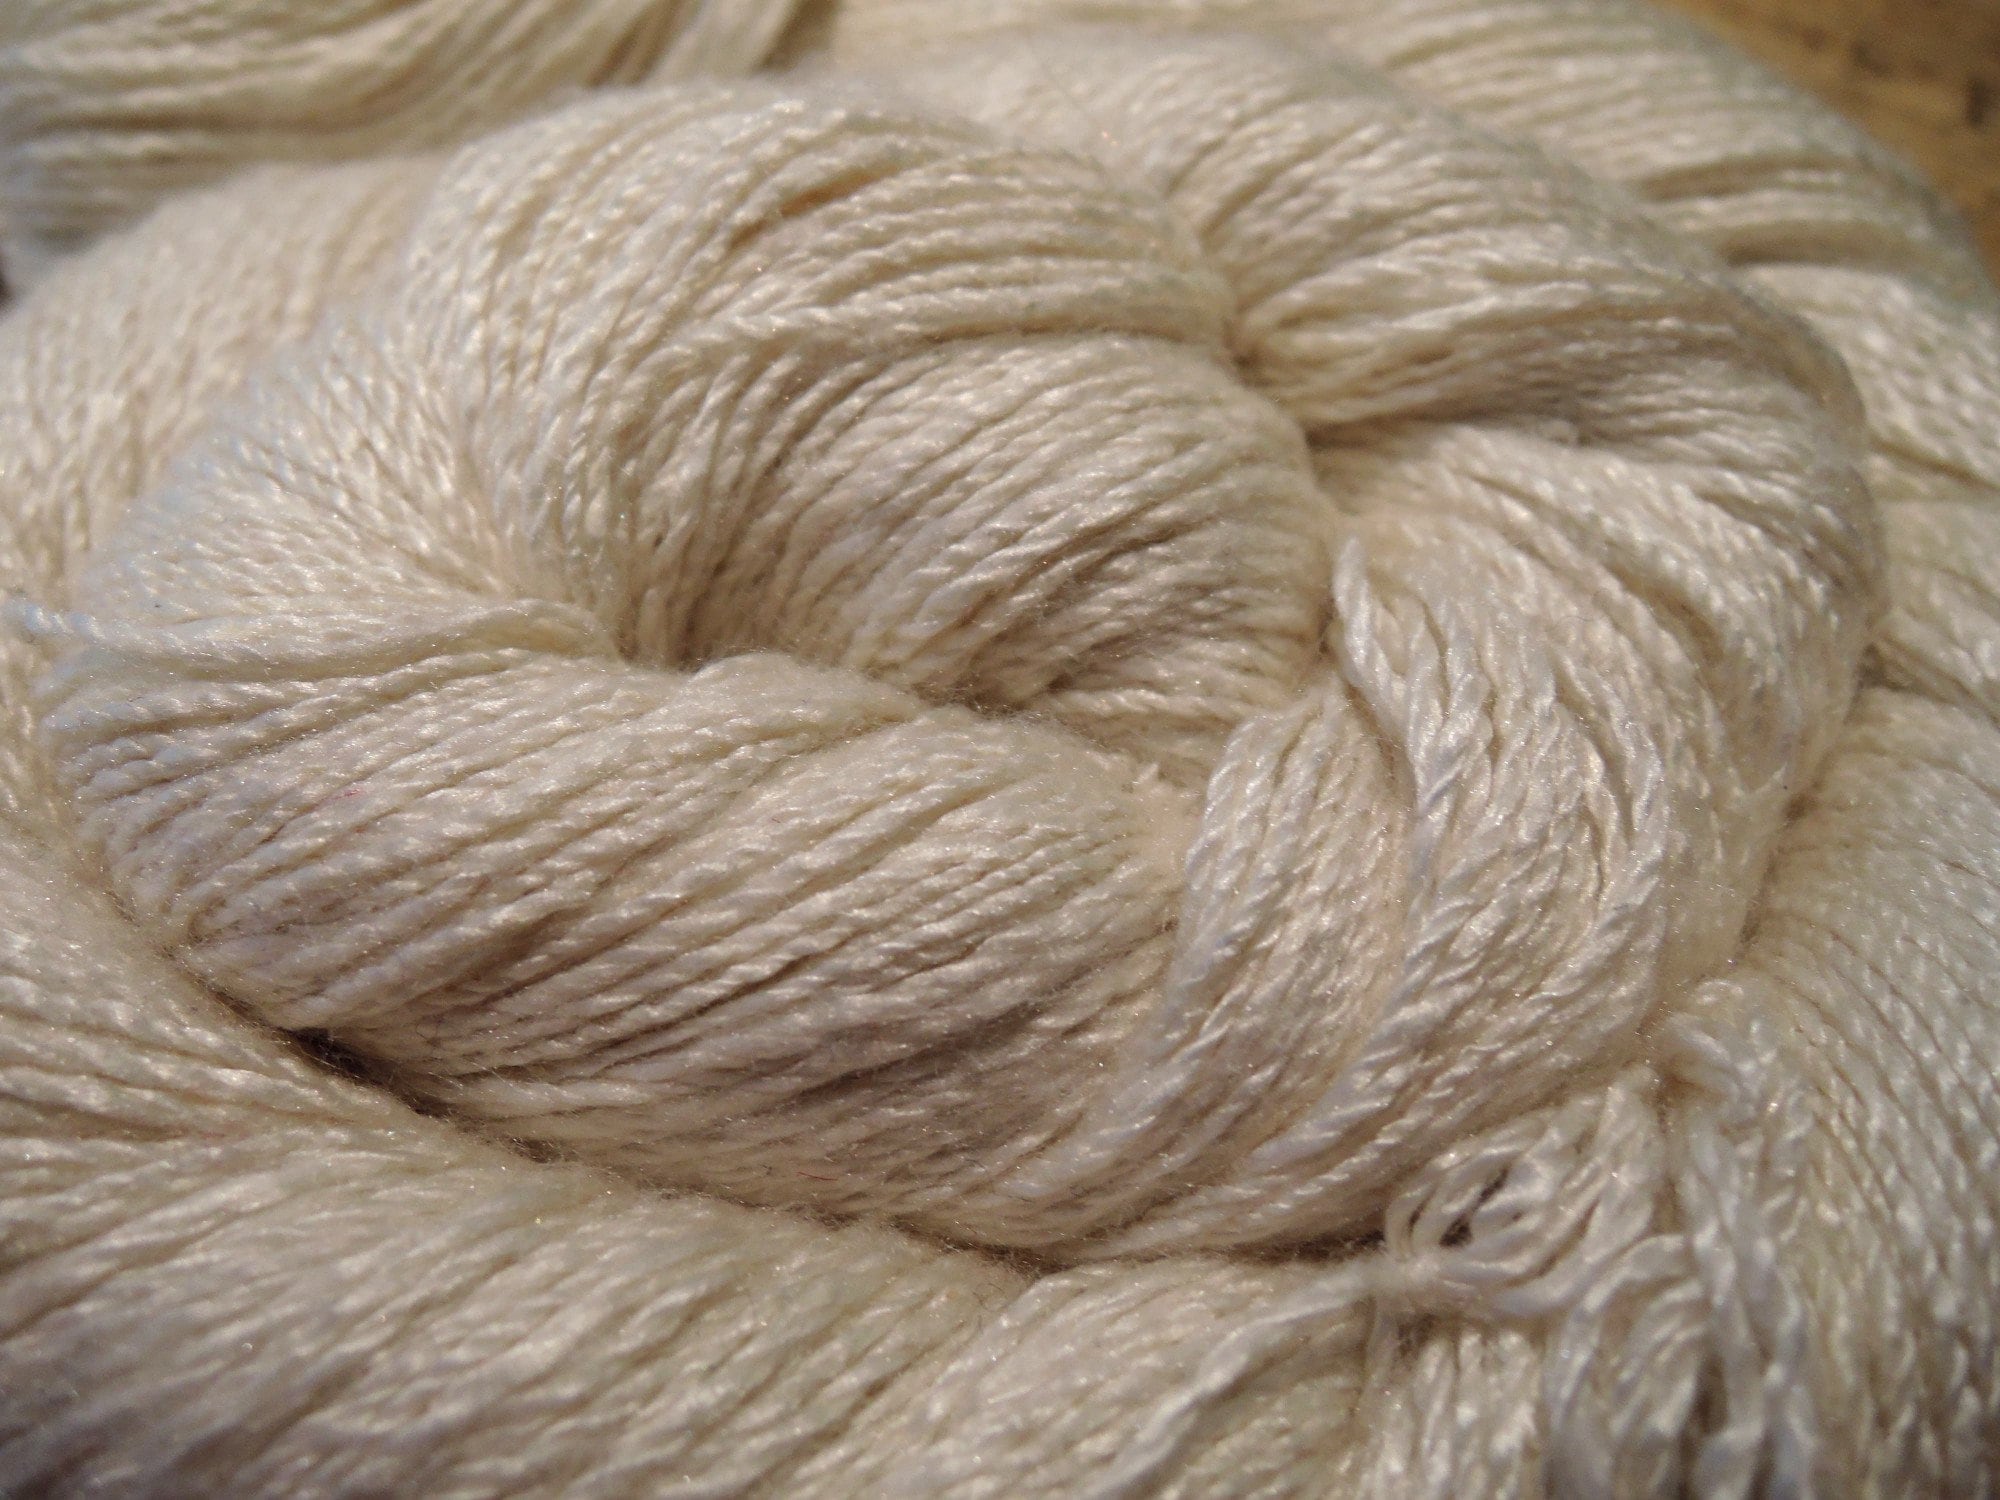 Product Details  OmShanti White - 100% White Eri (Wild Silk) Yarn